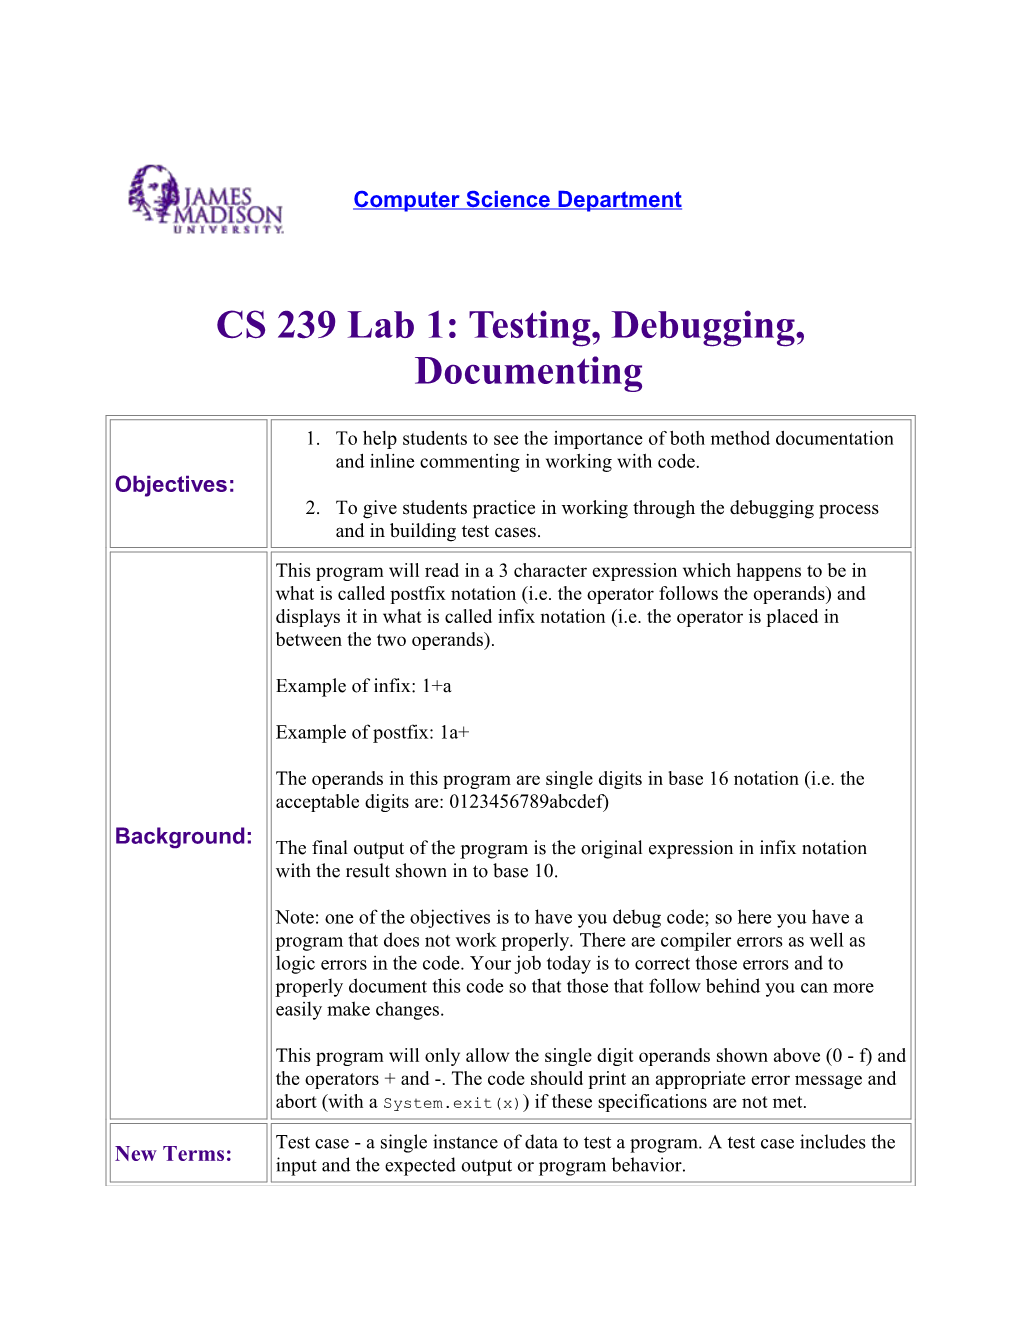 CS 239 Lab 1: Testing, Debugging, Documenting